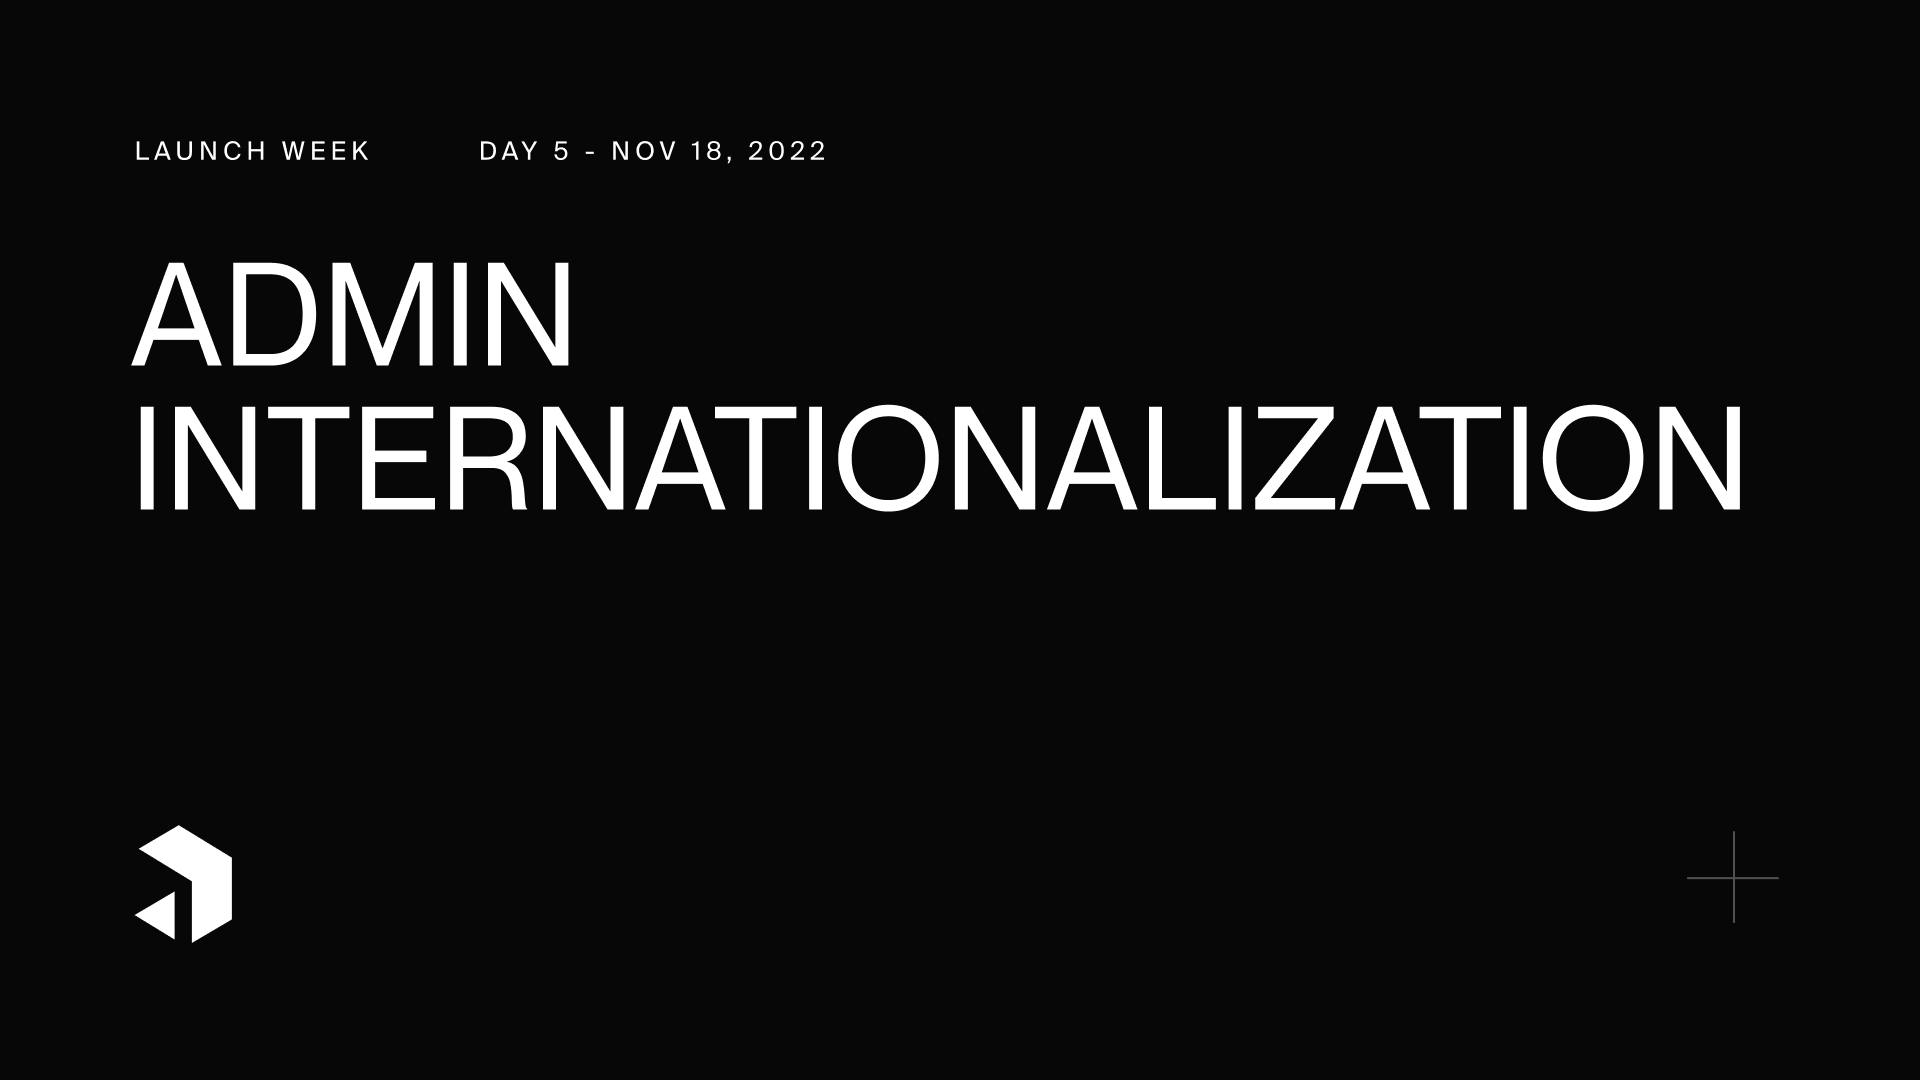 Launch Week Day 5 - Admin Internationalization